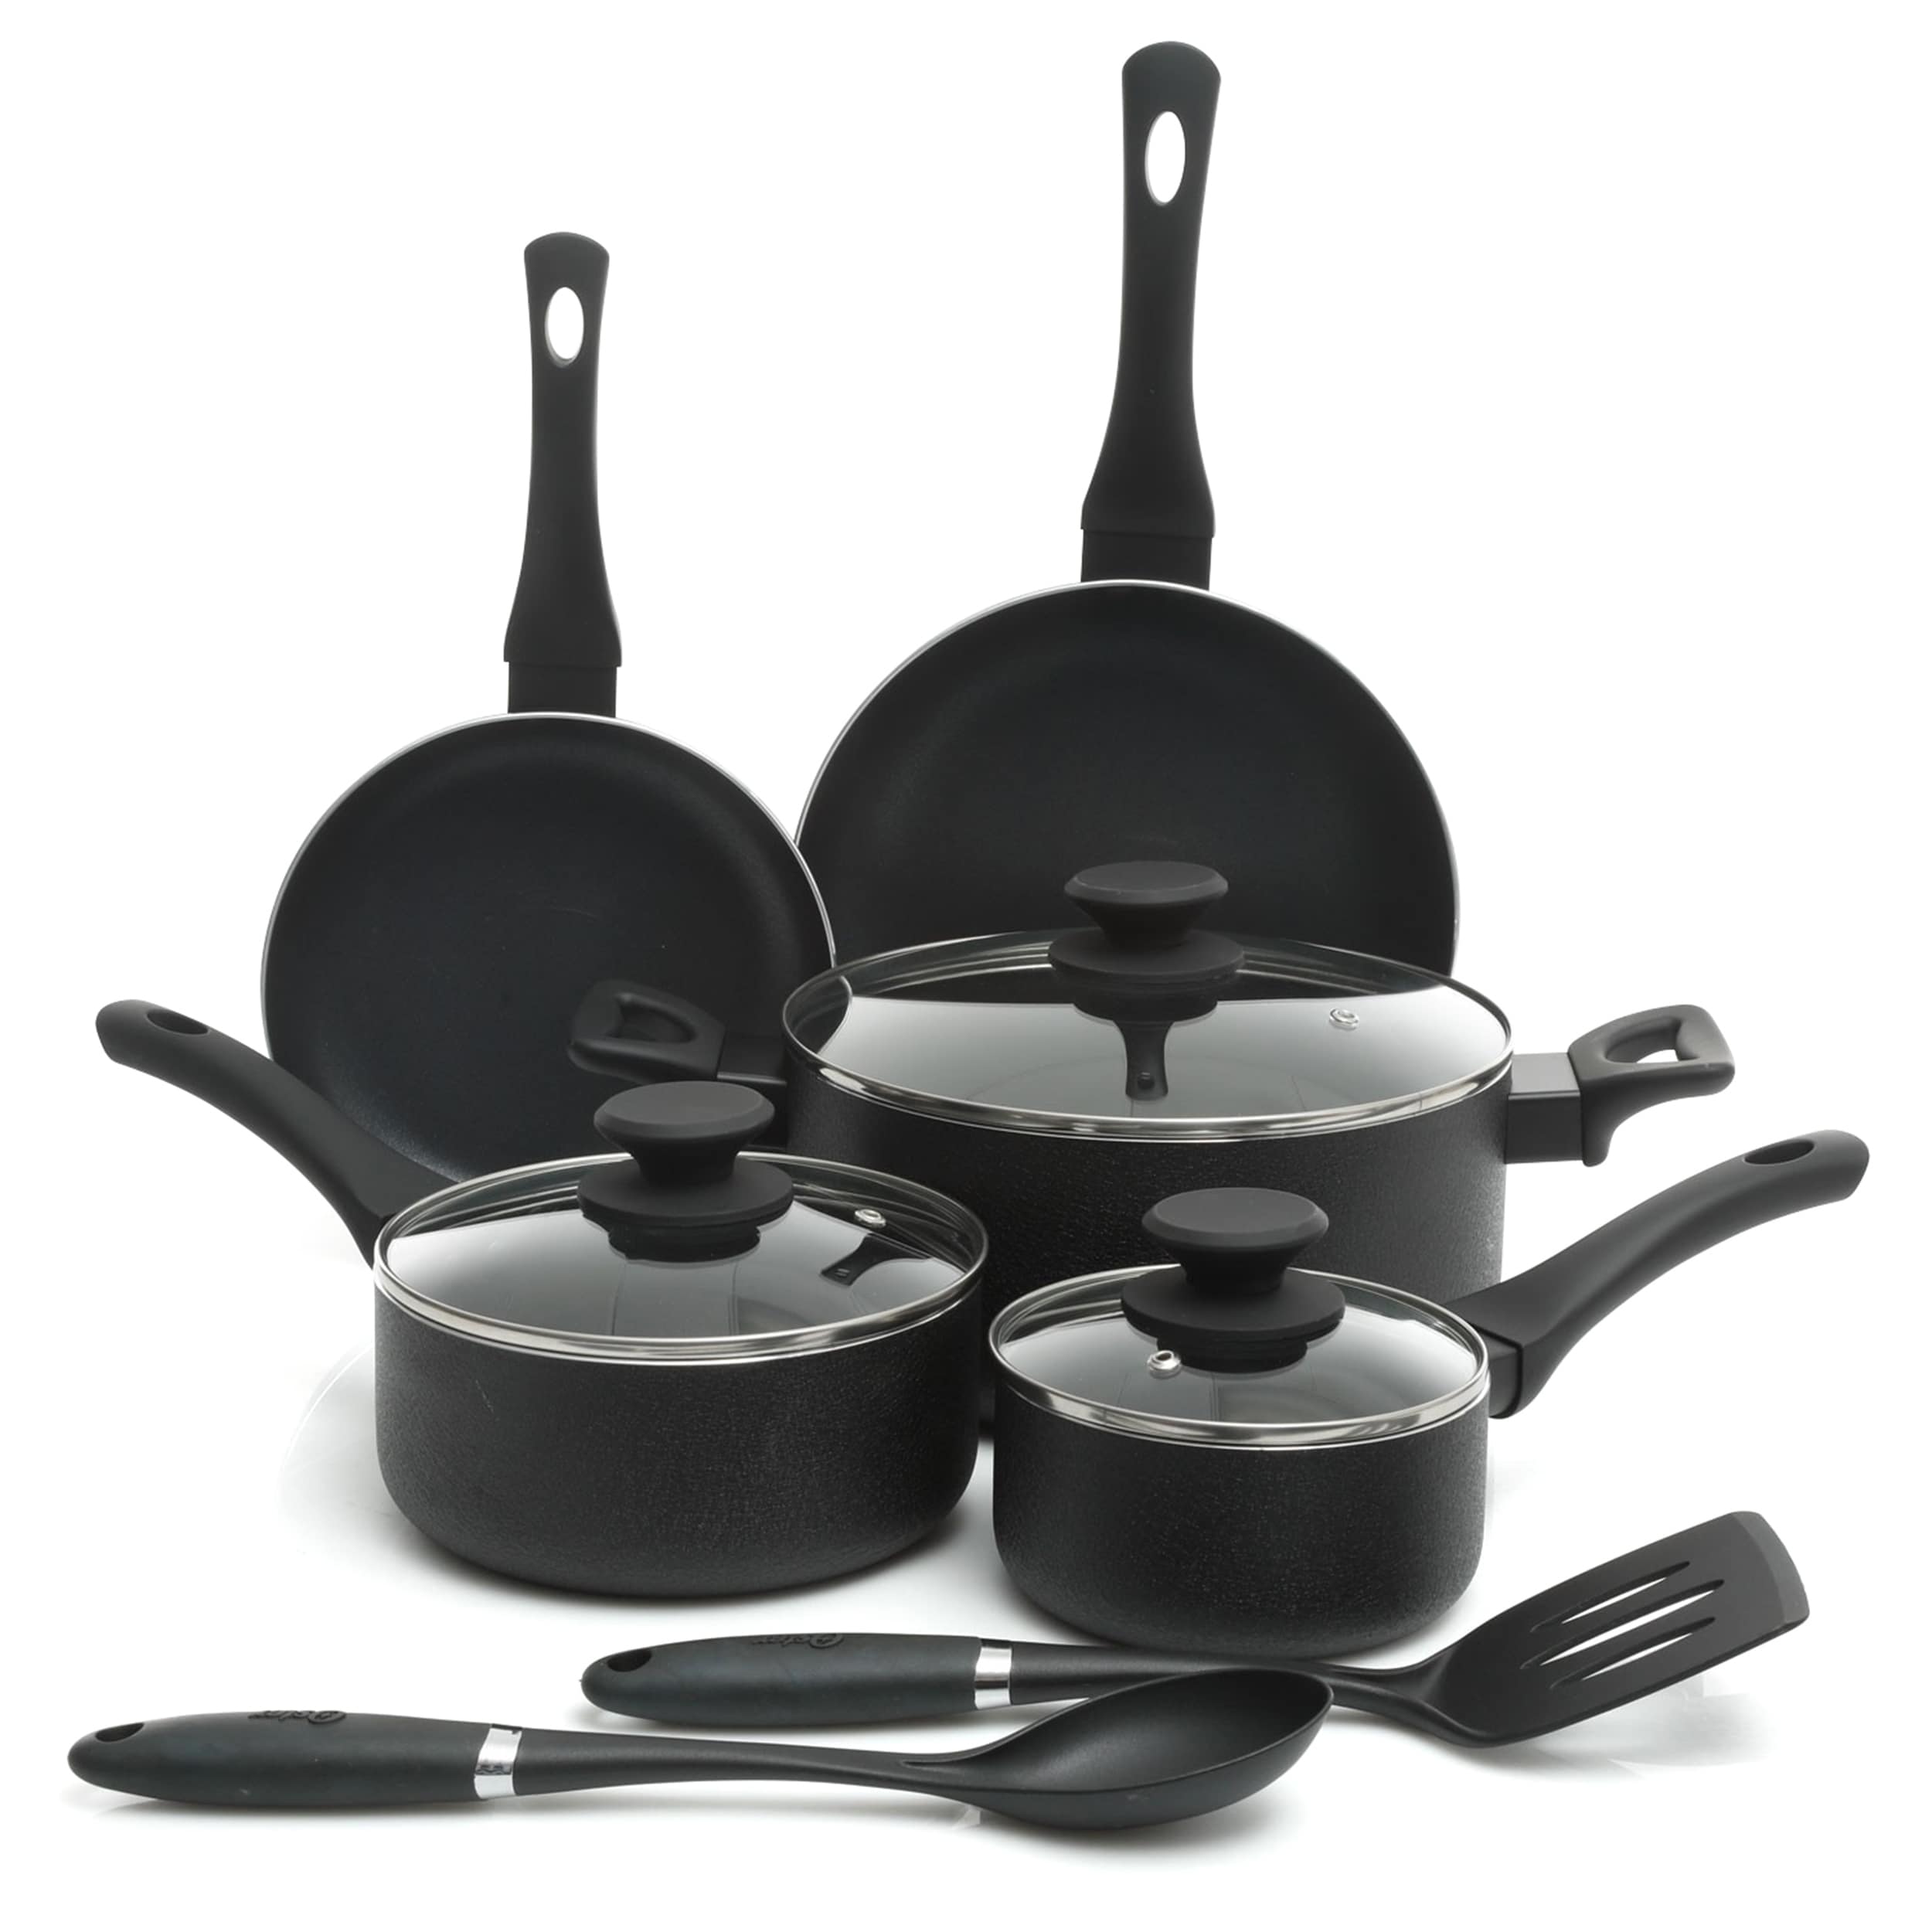 https://ak1.ostkcdn.com/images/products/is/images/direct/a0843bbabaf712076442a3e40d03e5460baa5dfb/Oster-Ashford-10-Piece-Aluminum-Nonstick-Cookware-Set-in-Black.jpg